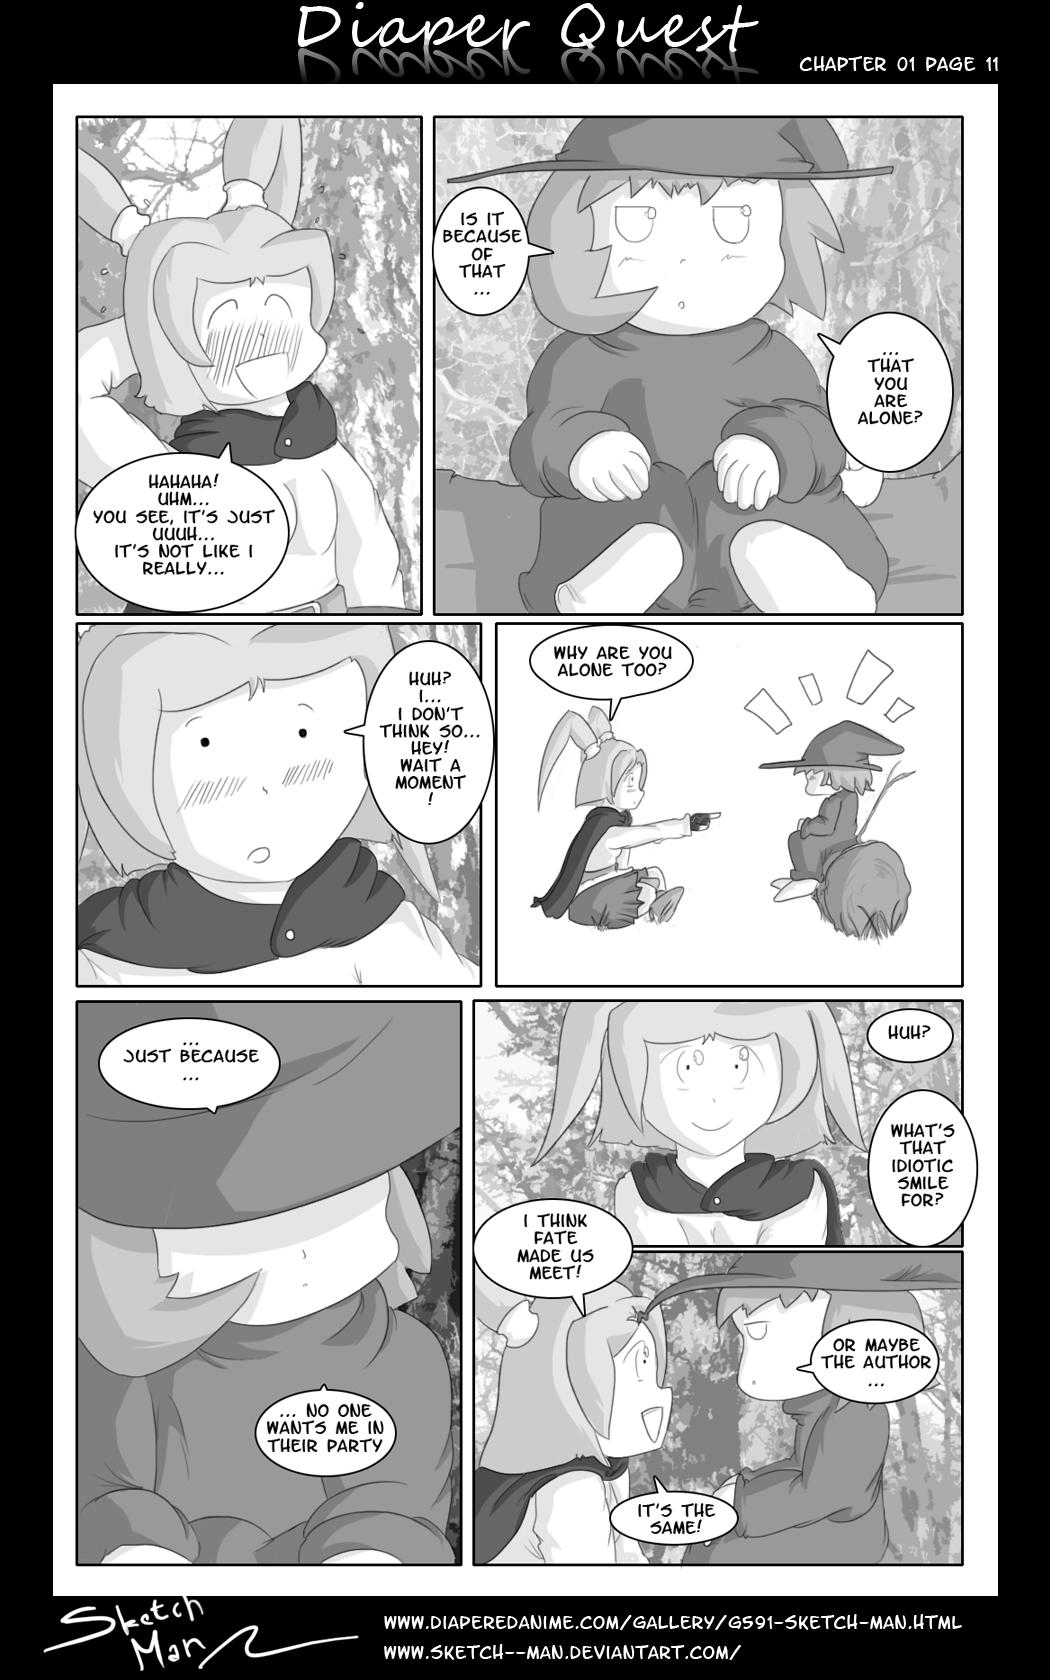 Socks Sketch Man's Diaper Quest Complete Teen Blowjob - Page 11